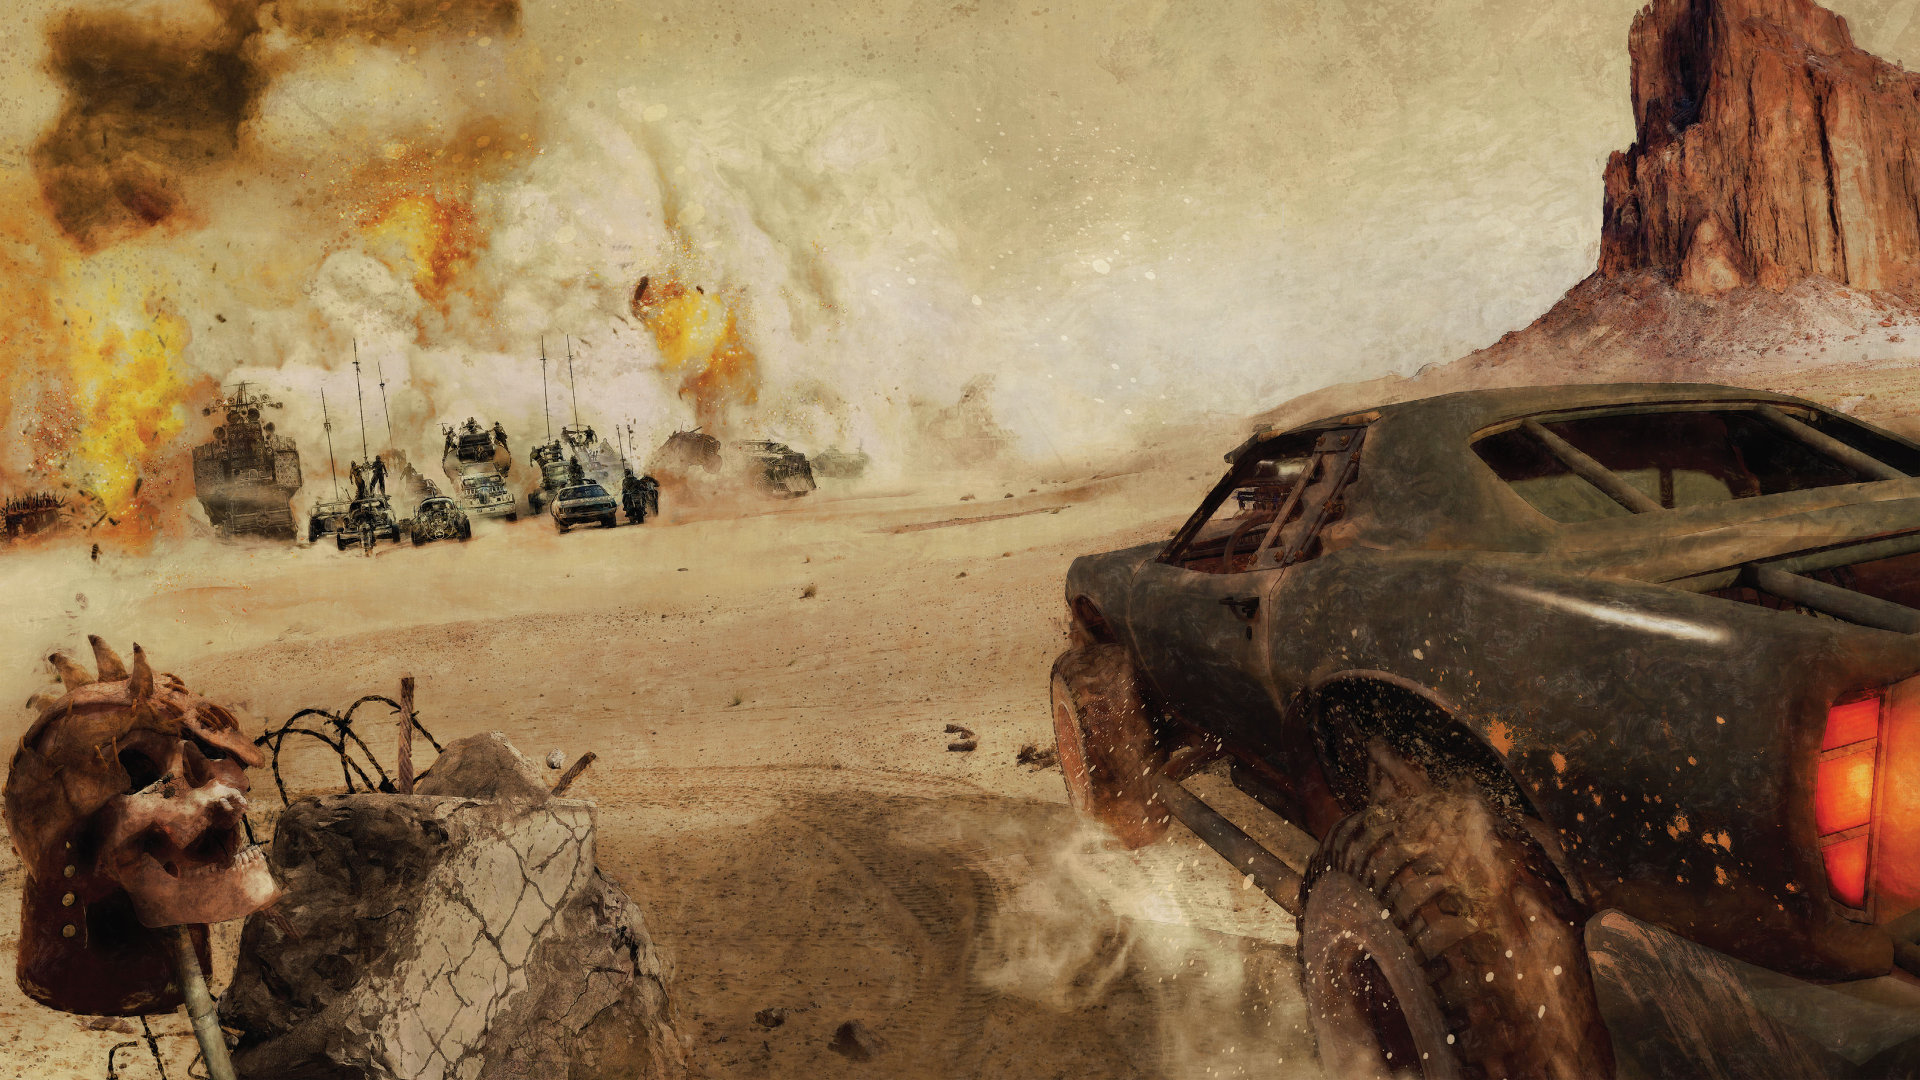 Download full hd 1920x1080 Mad Max: Fury Road PC wallpaper ID:137625 for free